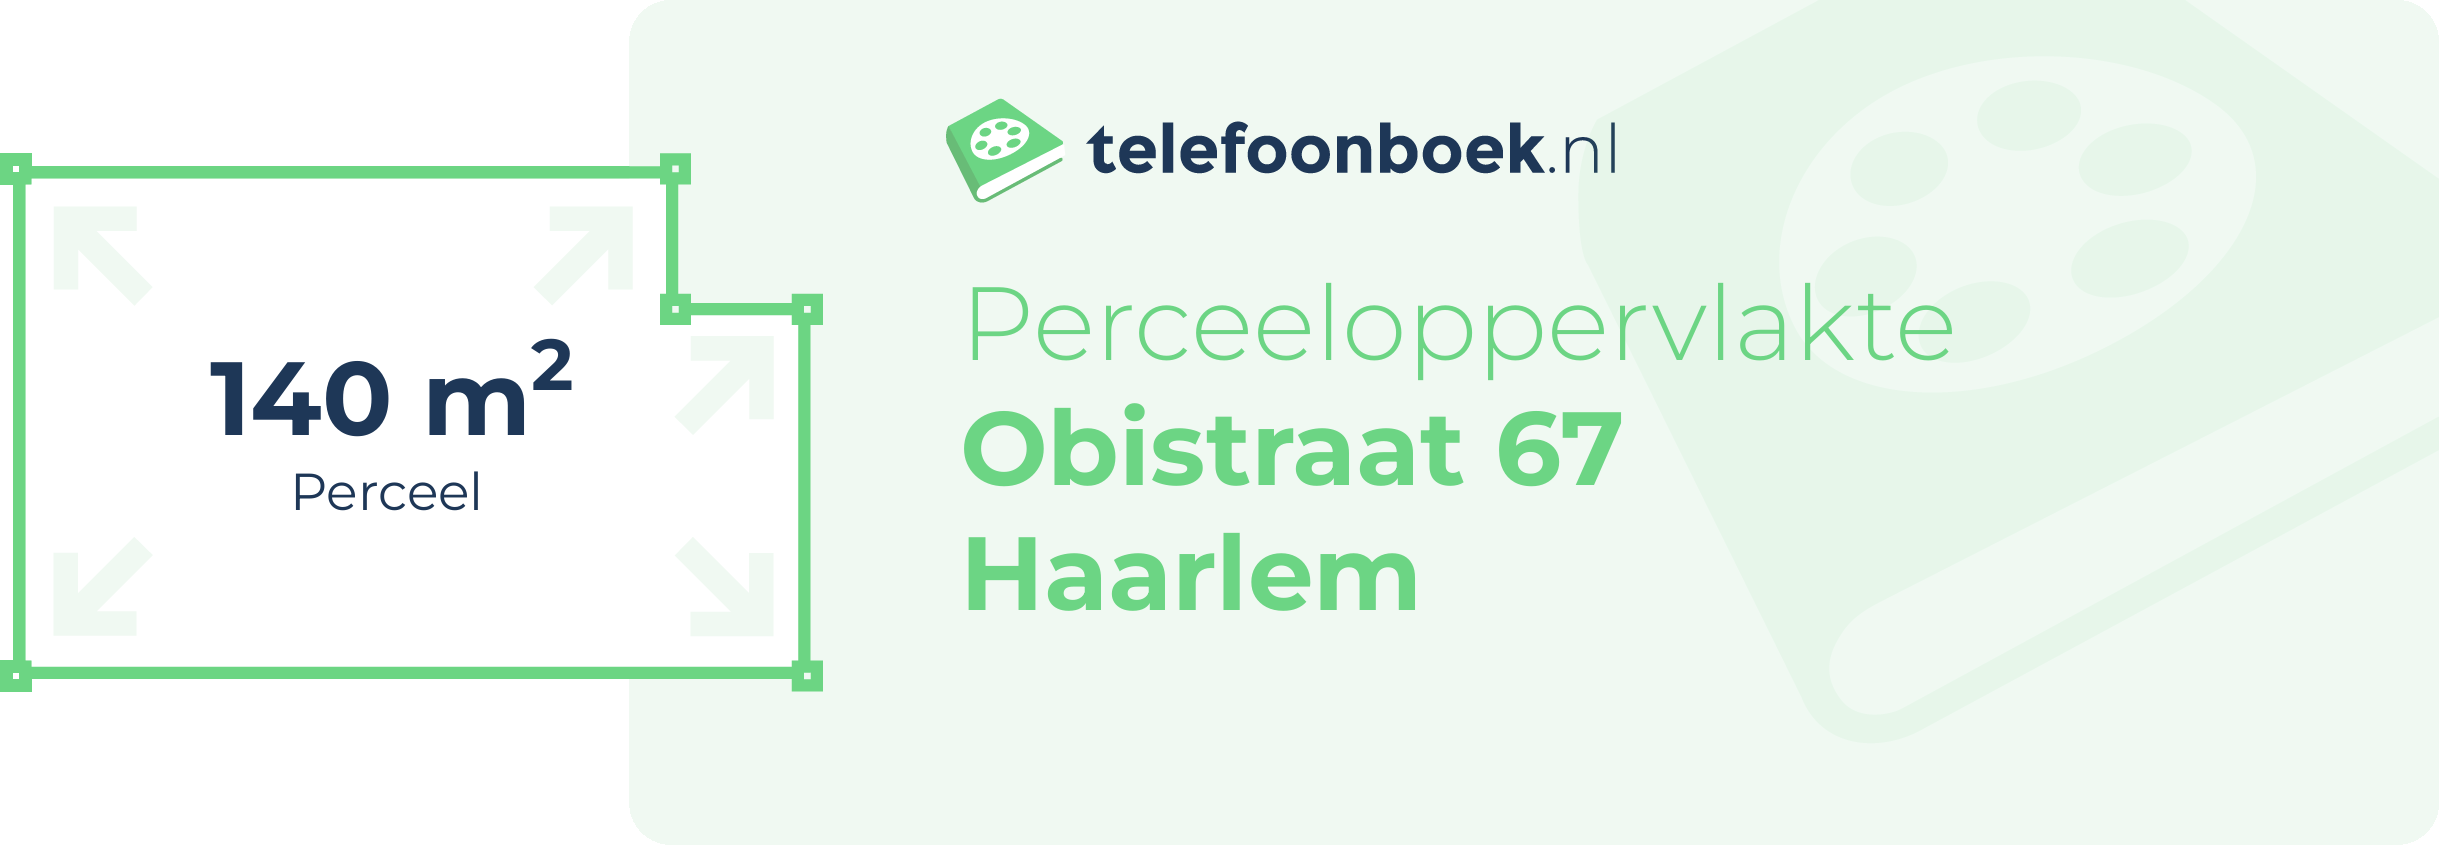 Perceeloppervlakte Obistraat 67 Haarlem